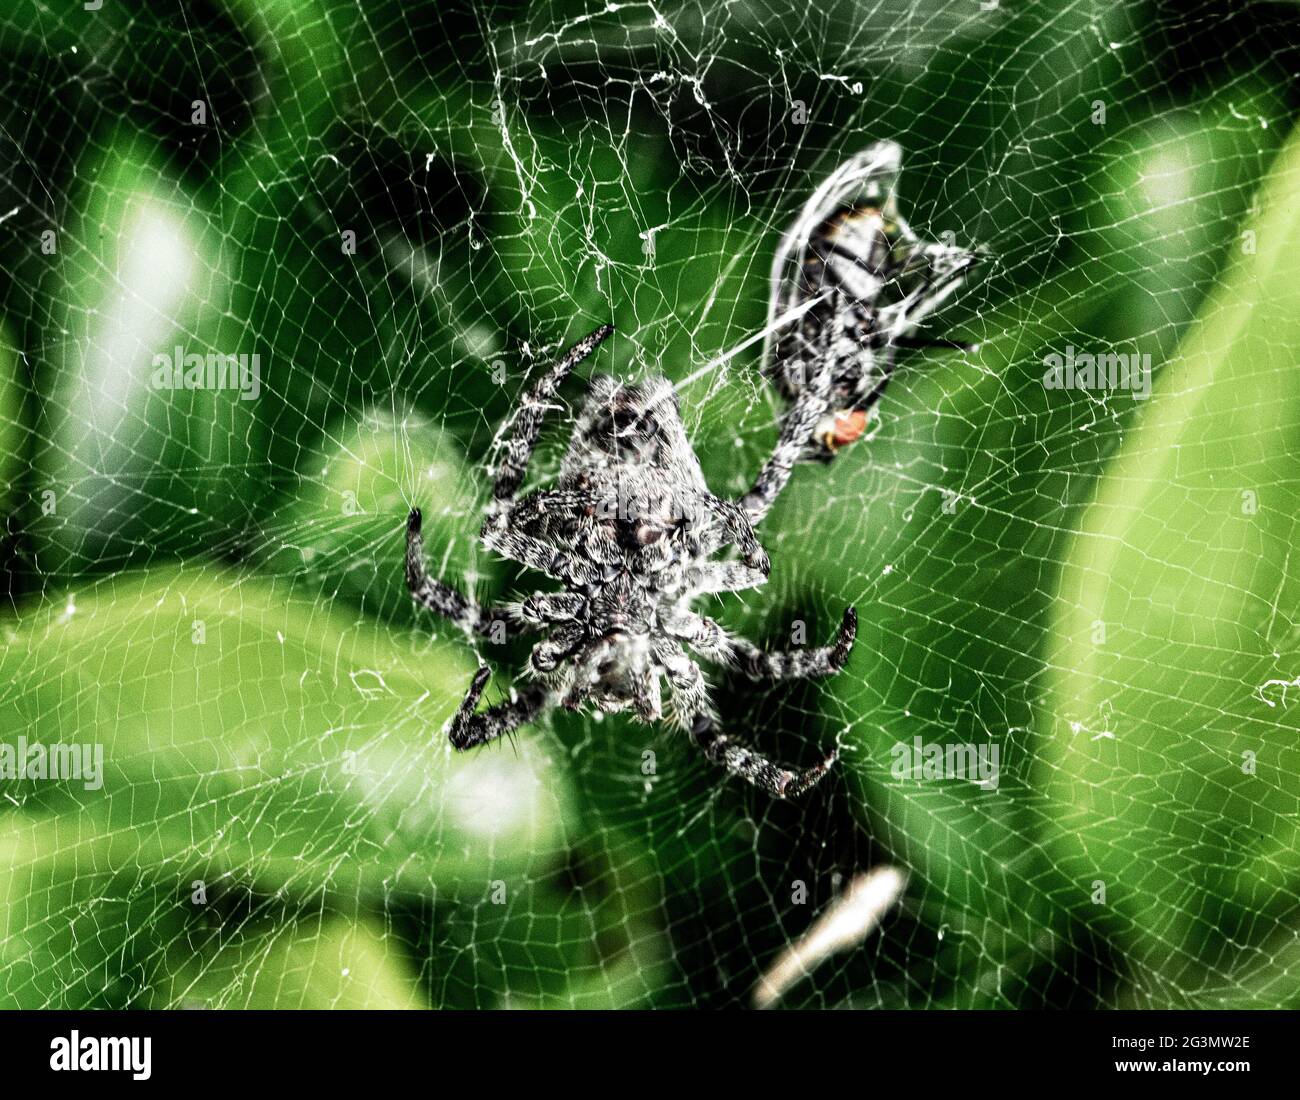 File:Spider-web-insect - West Virginia - ForestWander.jpg